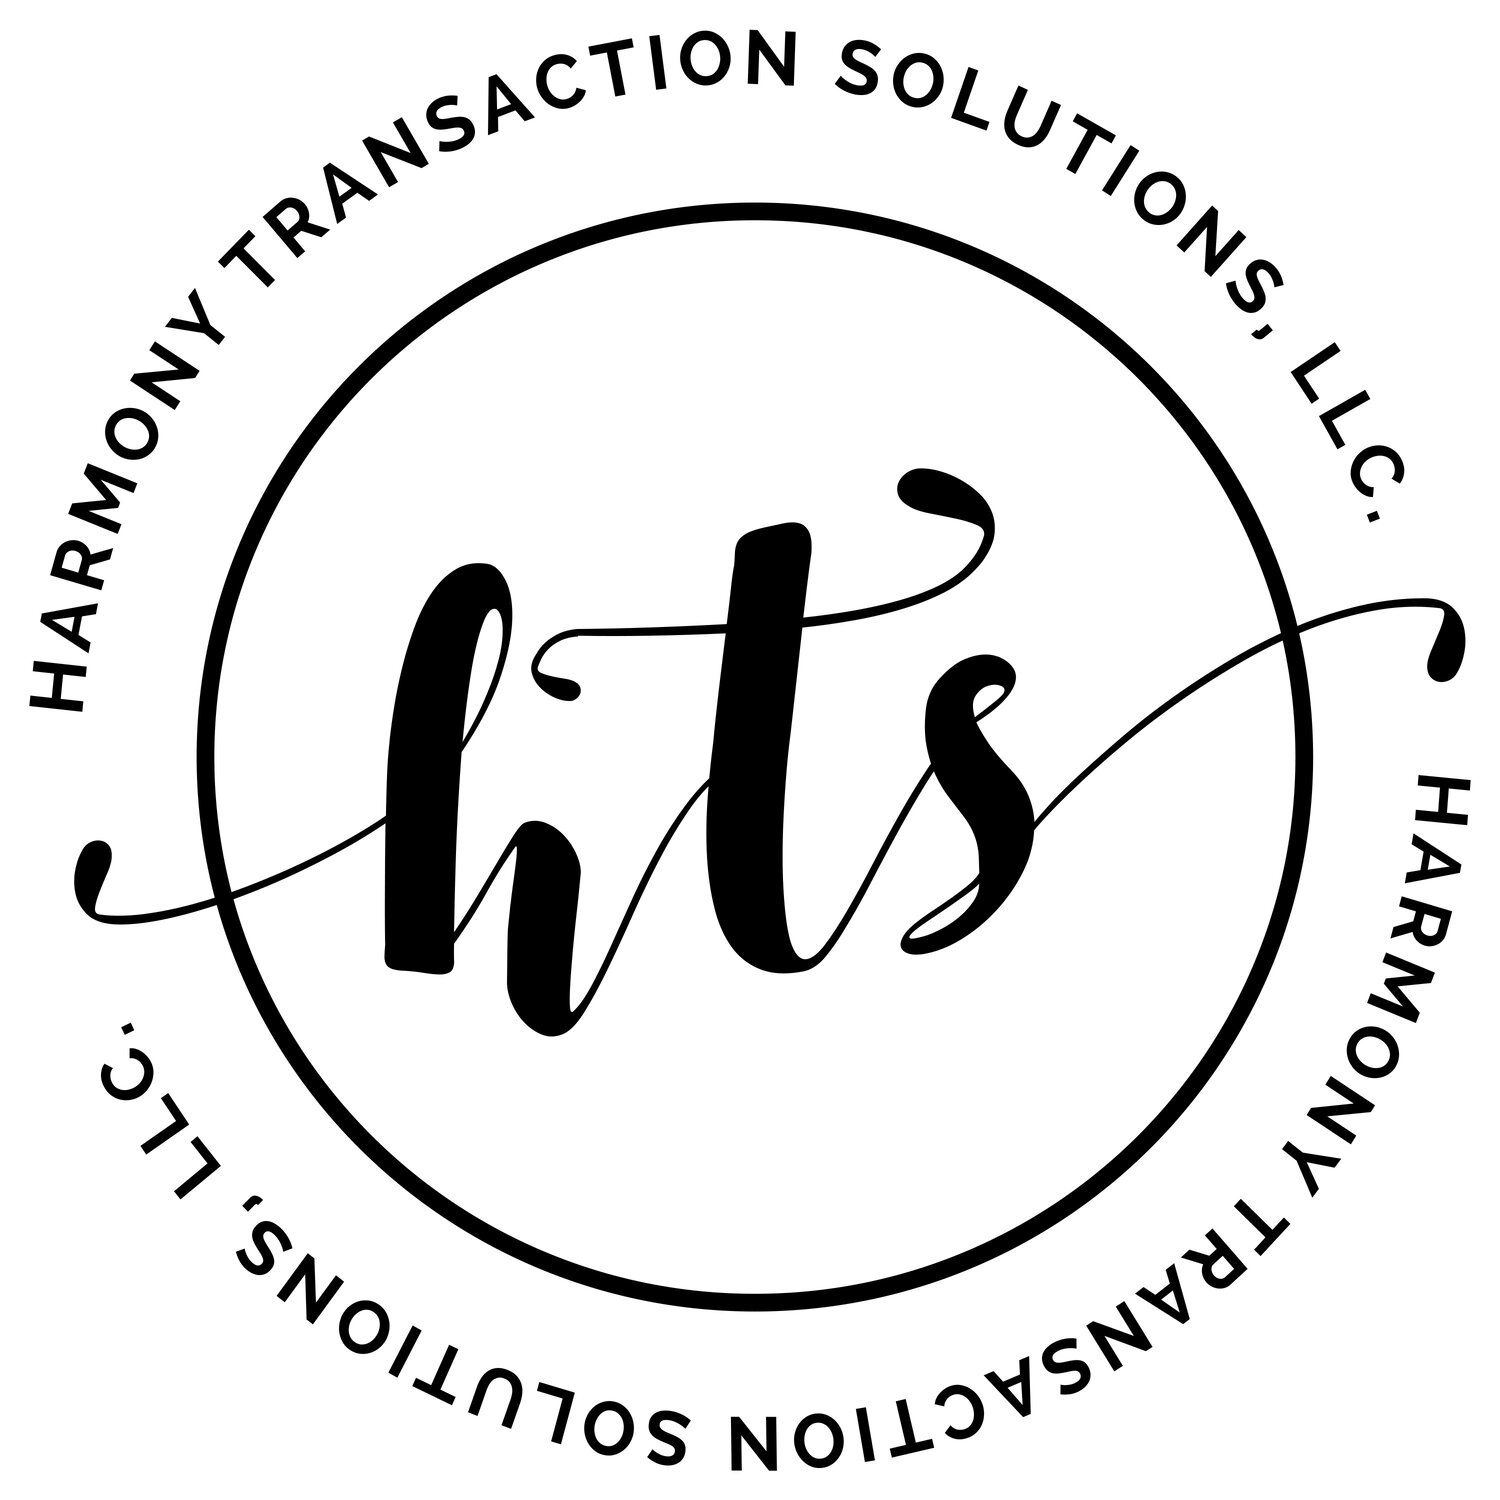 HARMONY TRANSACTION SOLUTIONS, LLC